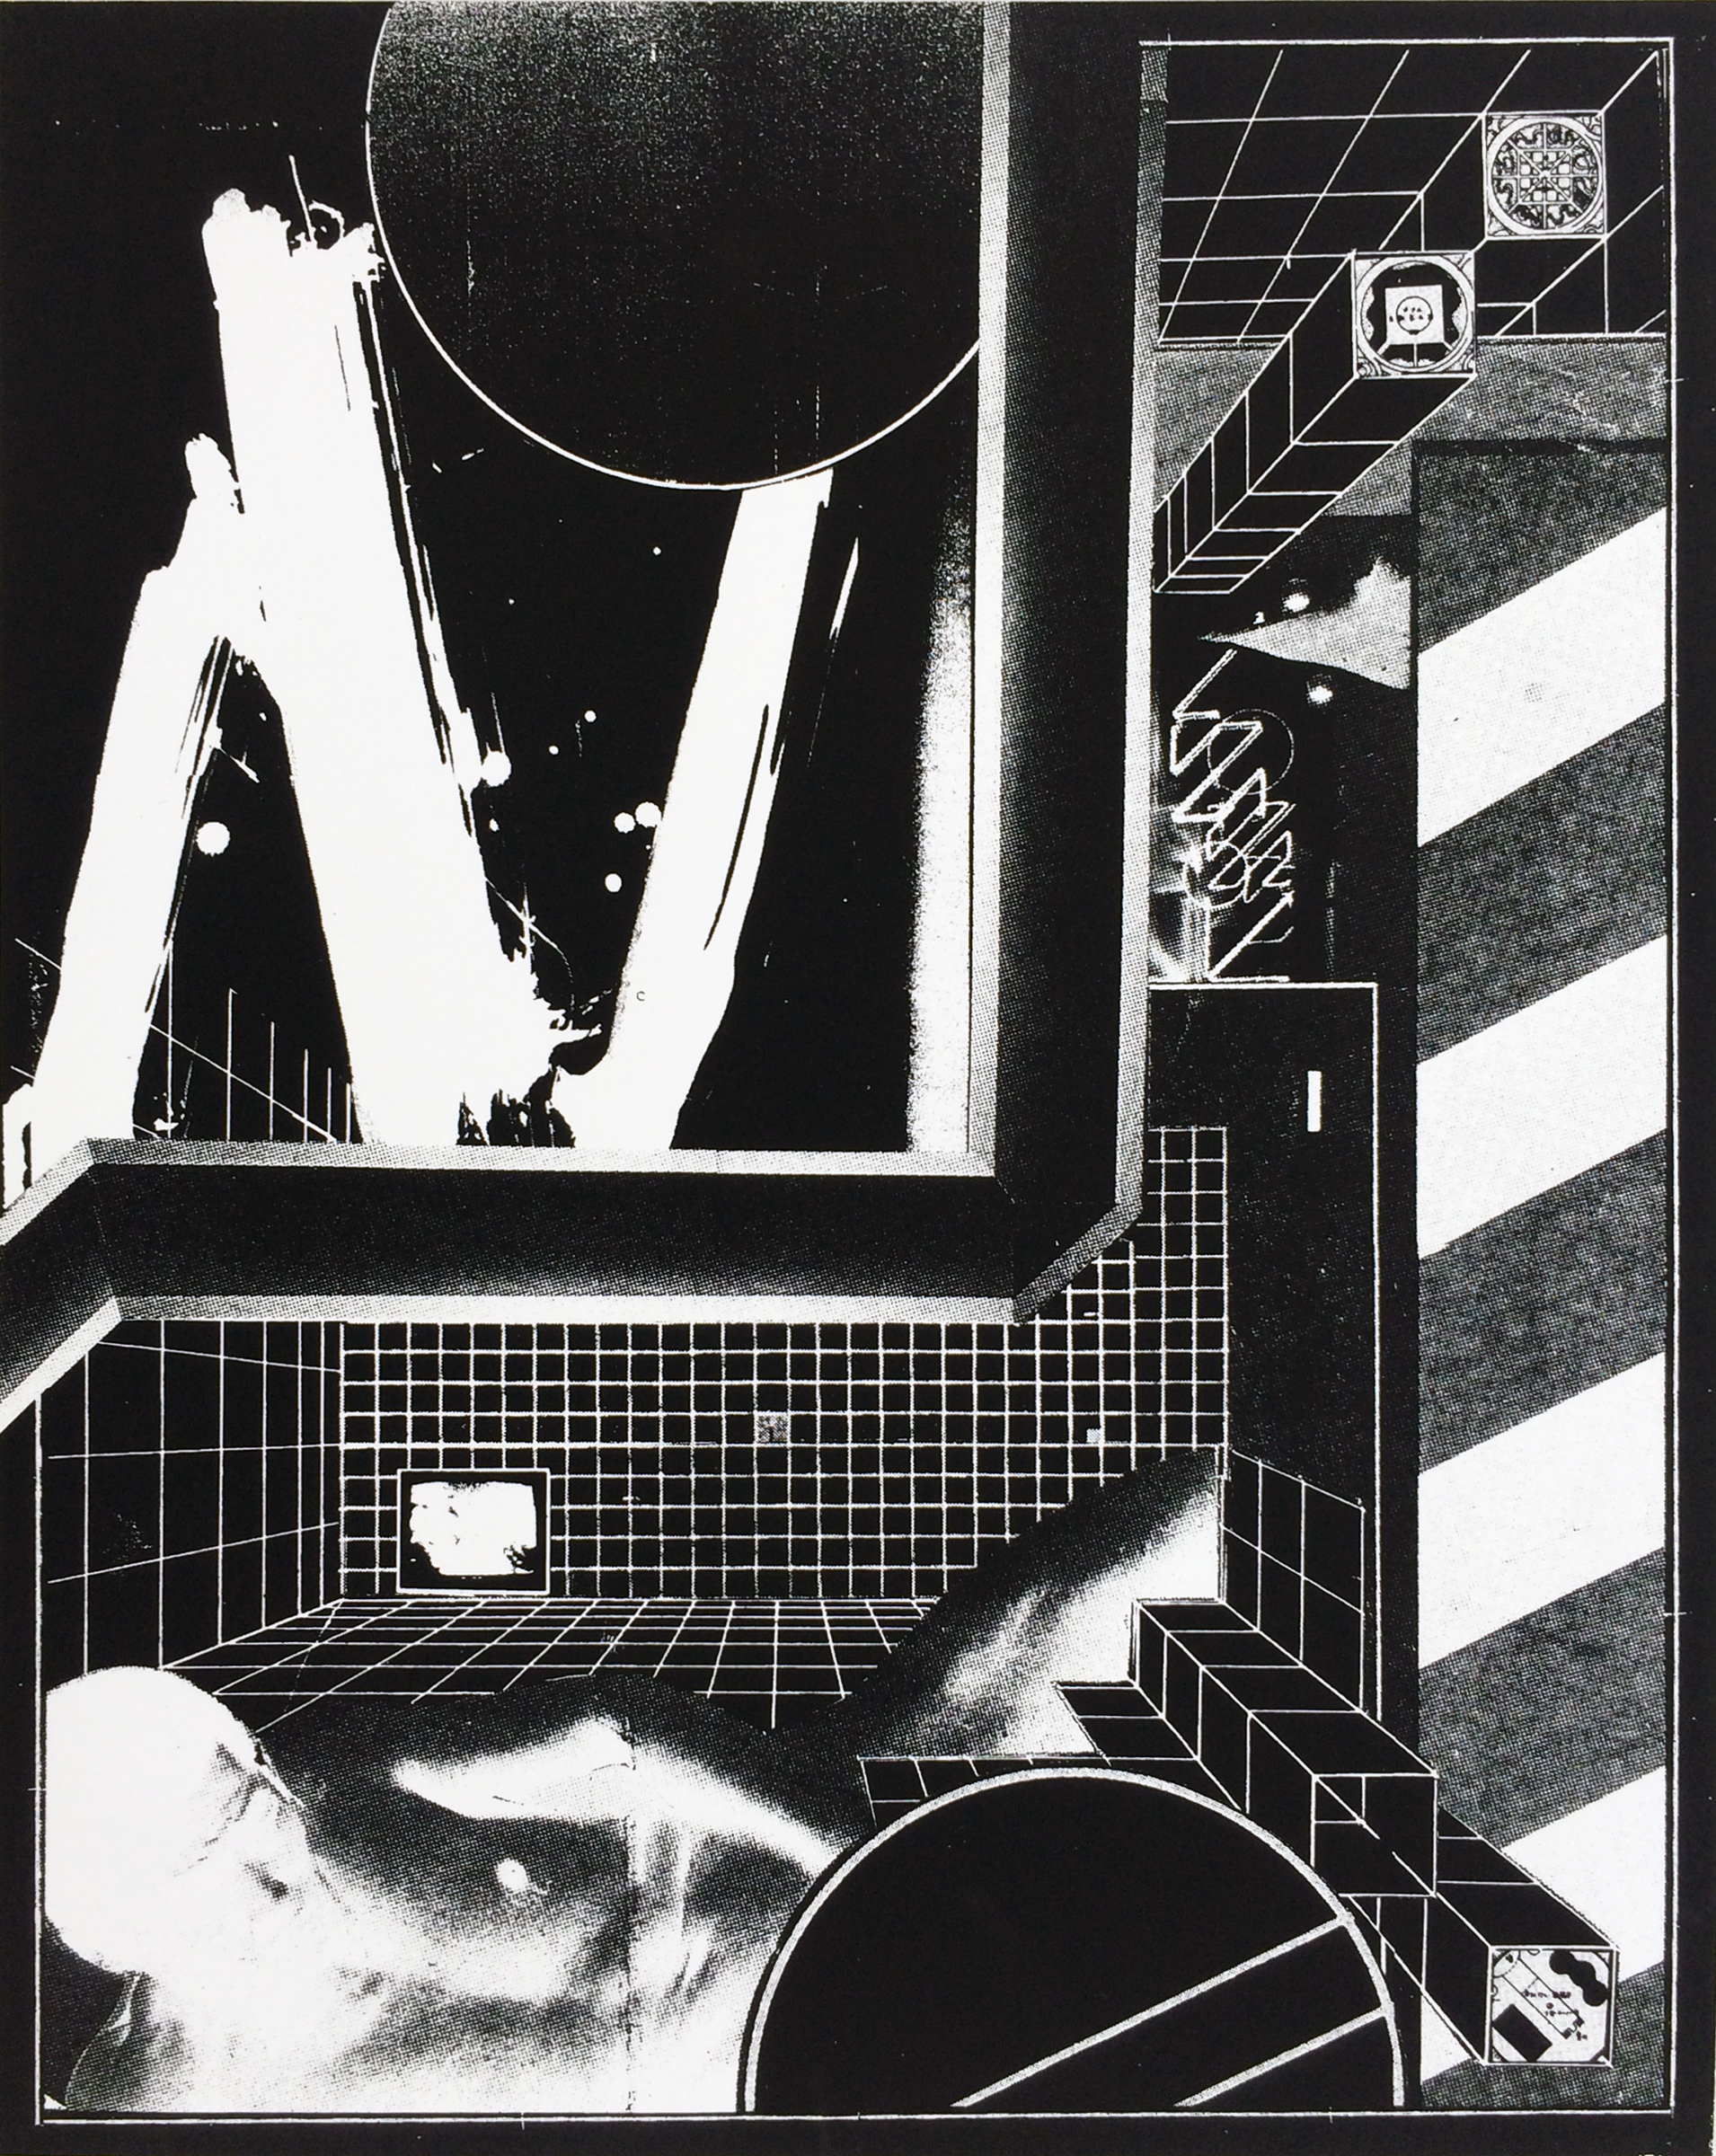  GWENAËL RATTKE  Capsule Plaza , 2015 unique silkscreen on paper, 19.5” x 15.5” 